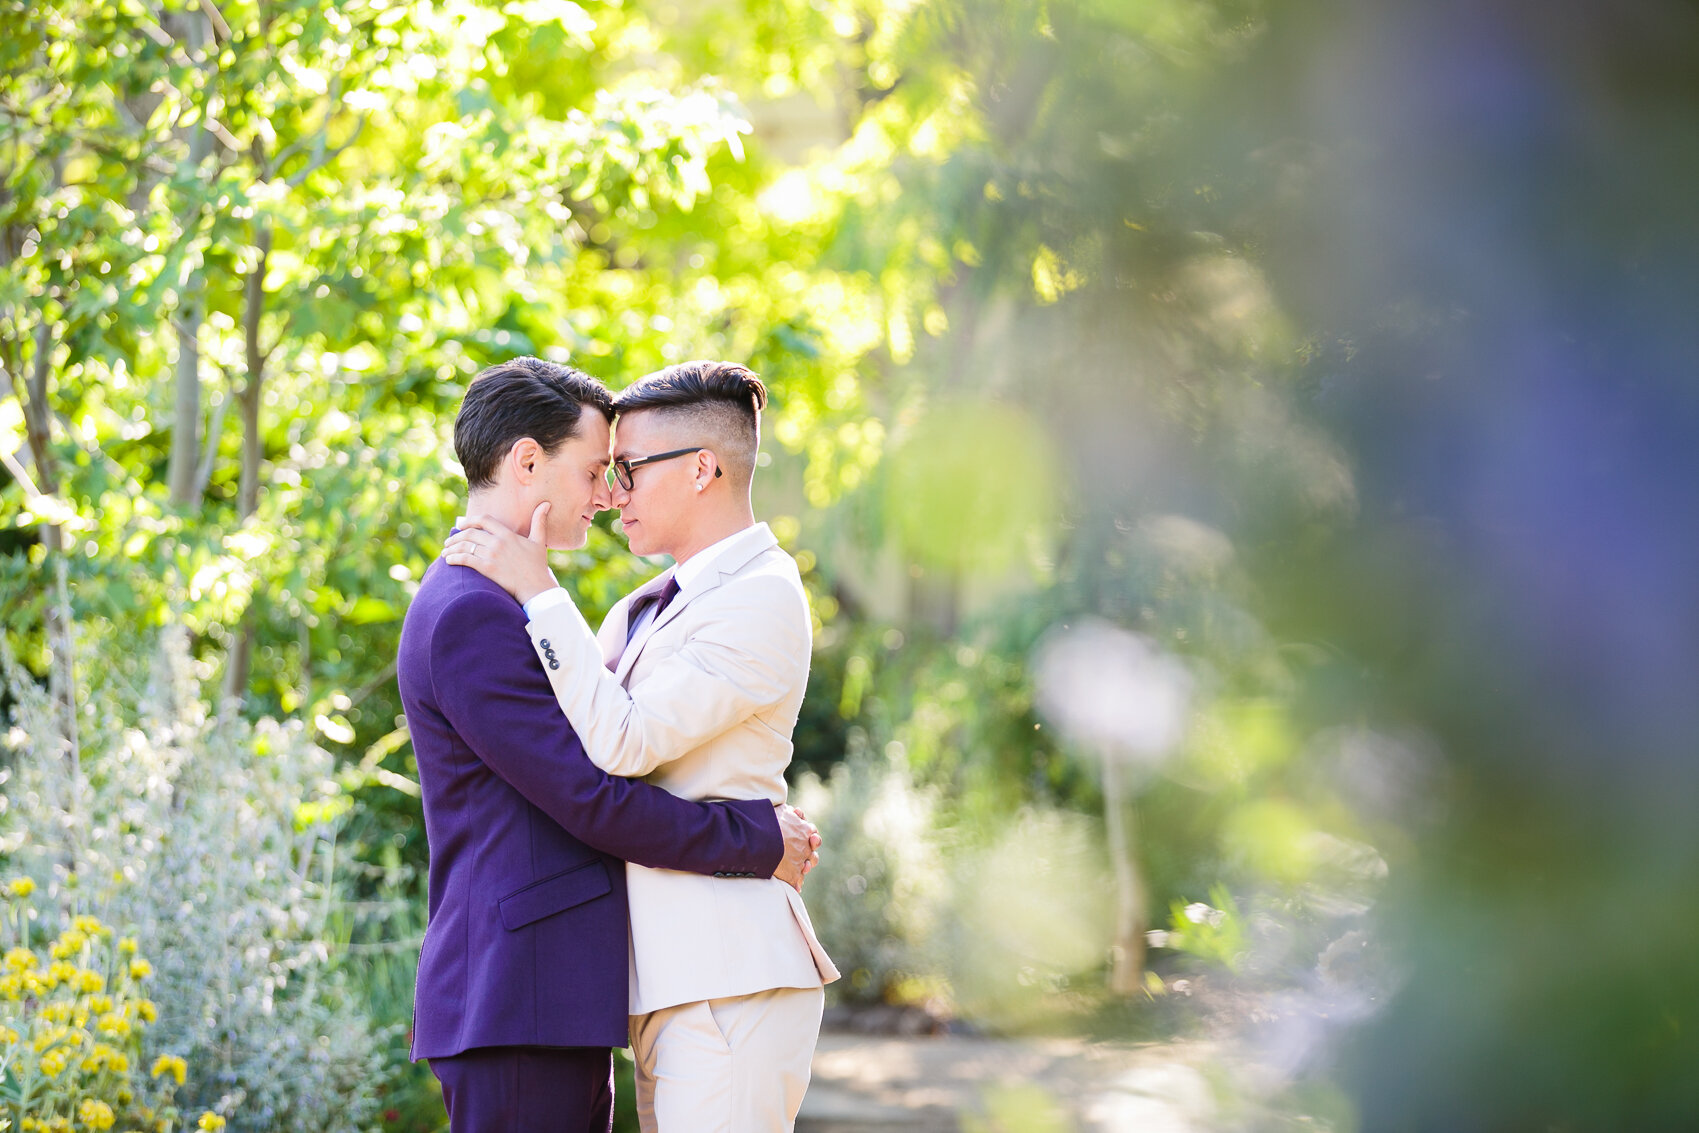 Rainbow_Wedding_Editorial_Photographer_Same_Sex_Couple_Gay_Marriage_Jewel_Tone_California_Malibu_Photography-0798.jpg